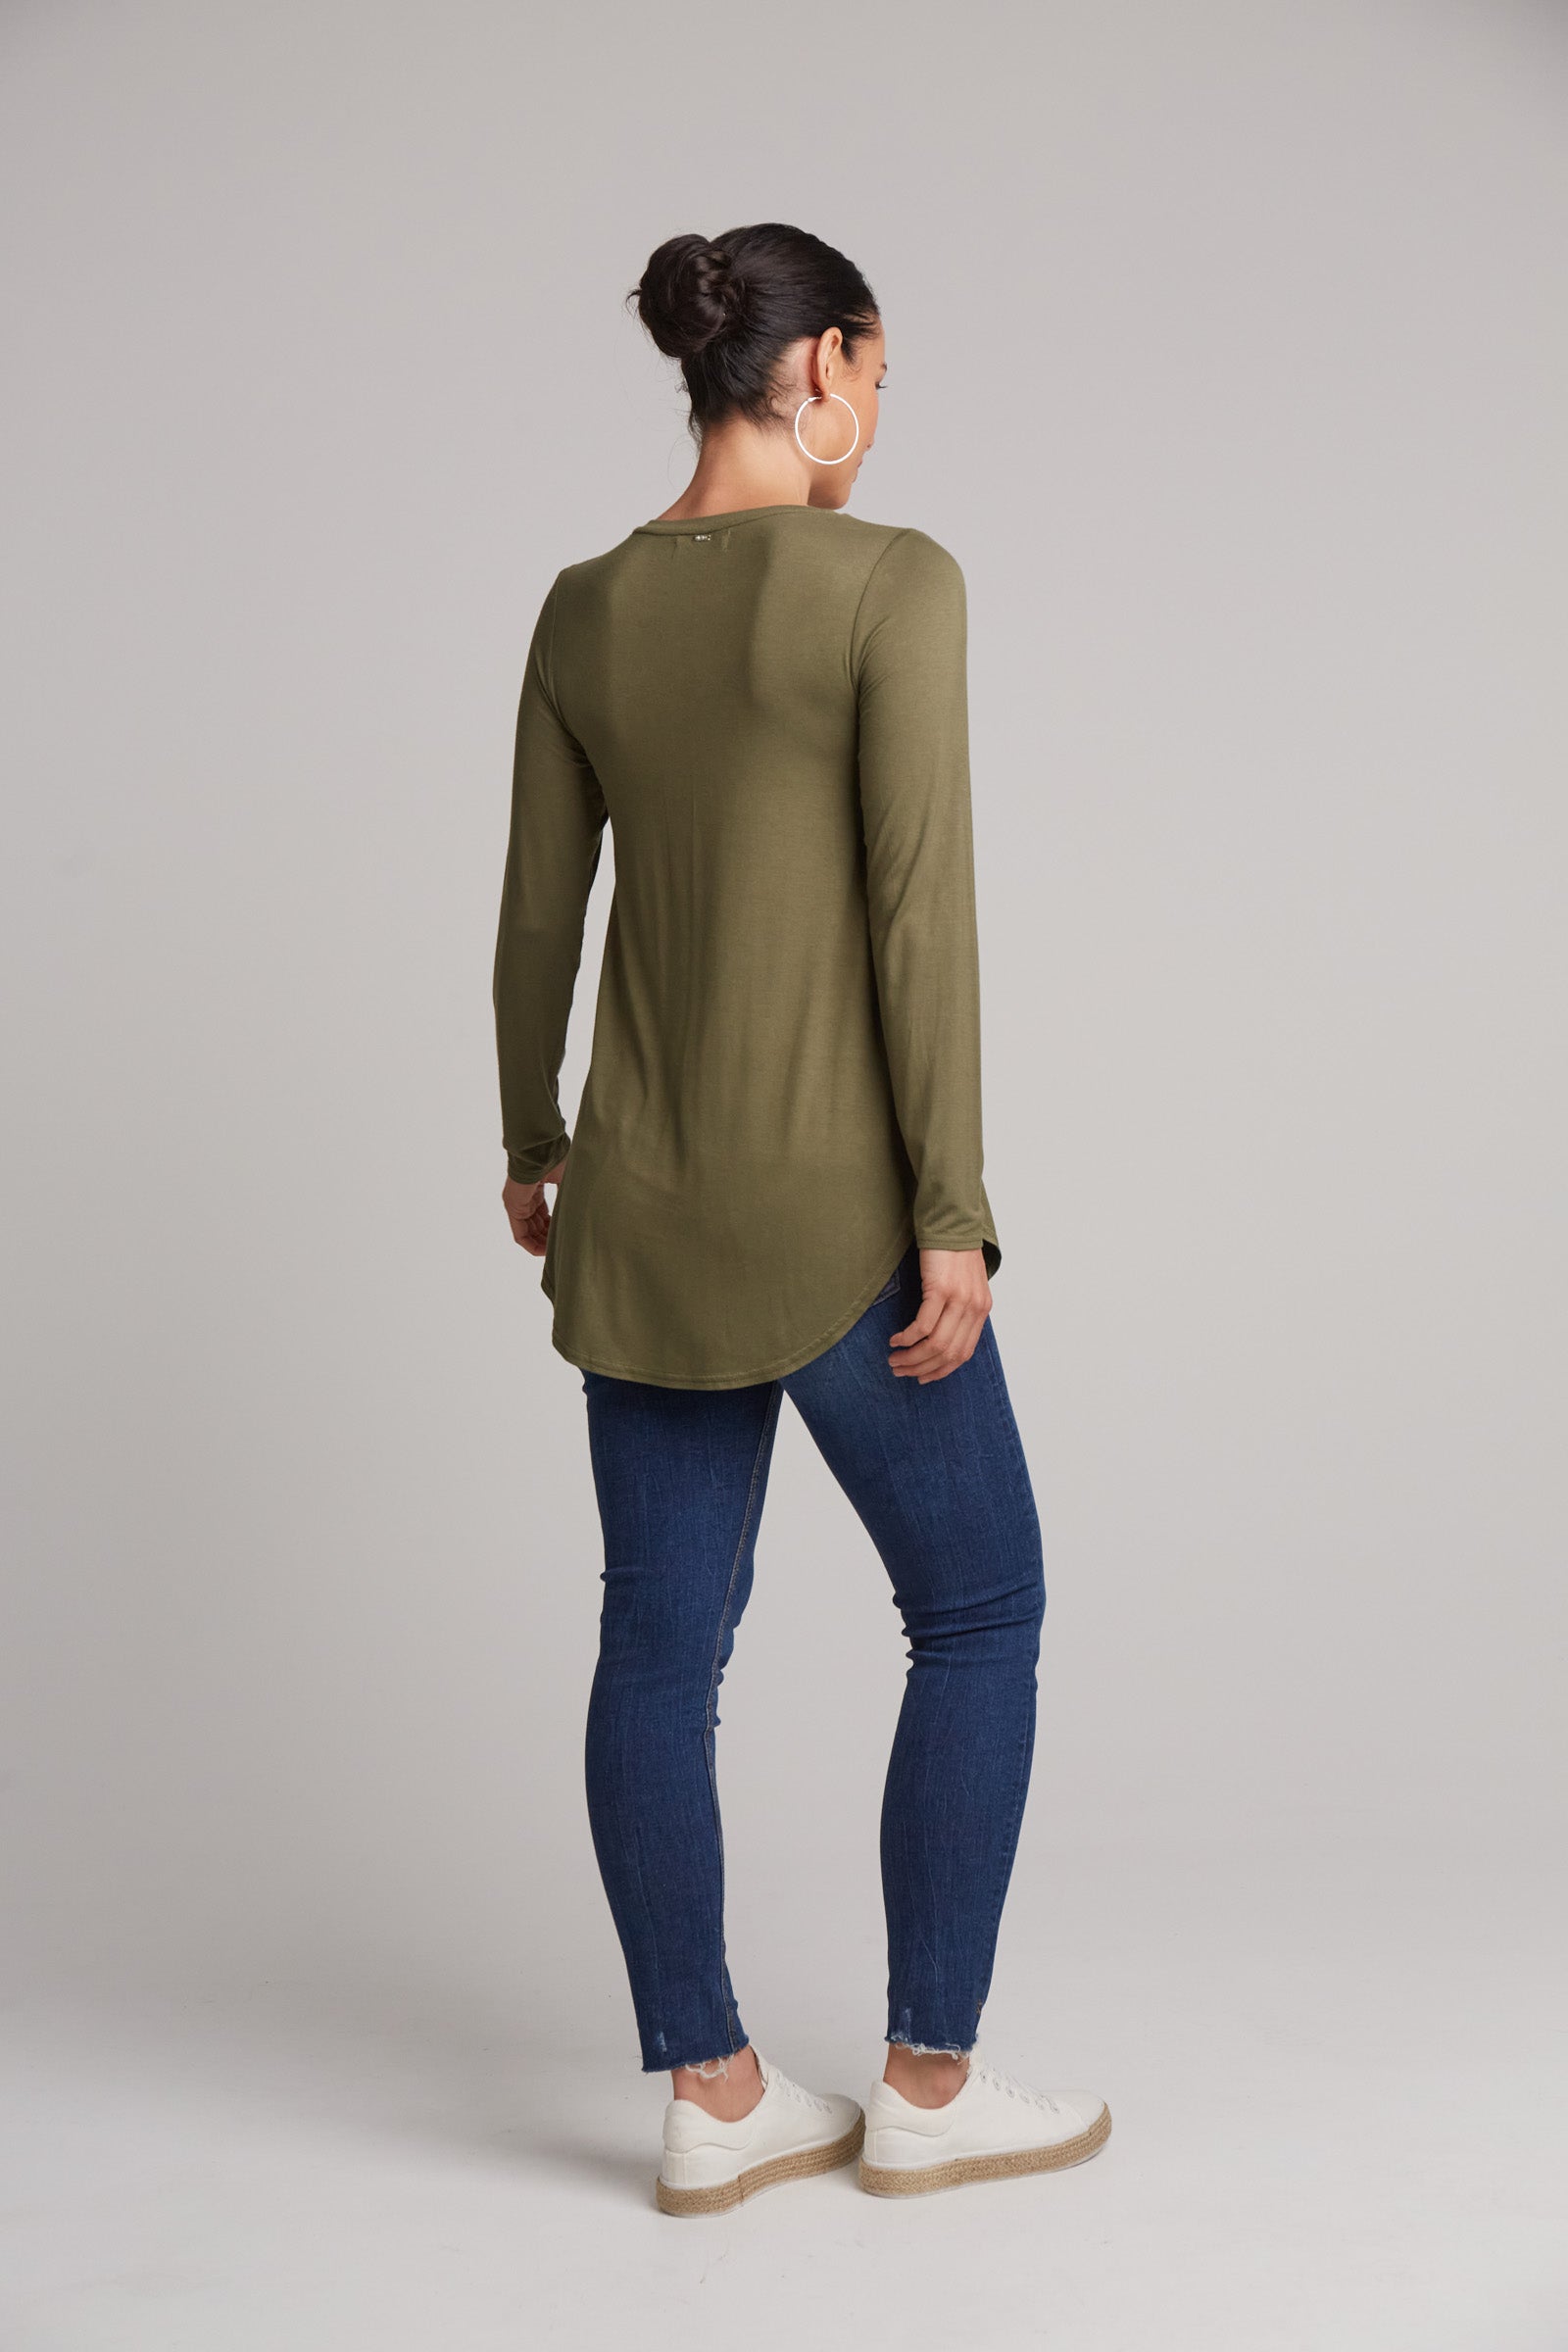 Studio Jersey Tshirt - Fern - eb&ive Clothing - Top L/S Jersey